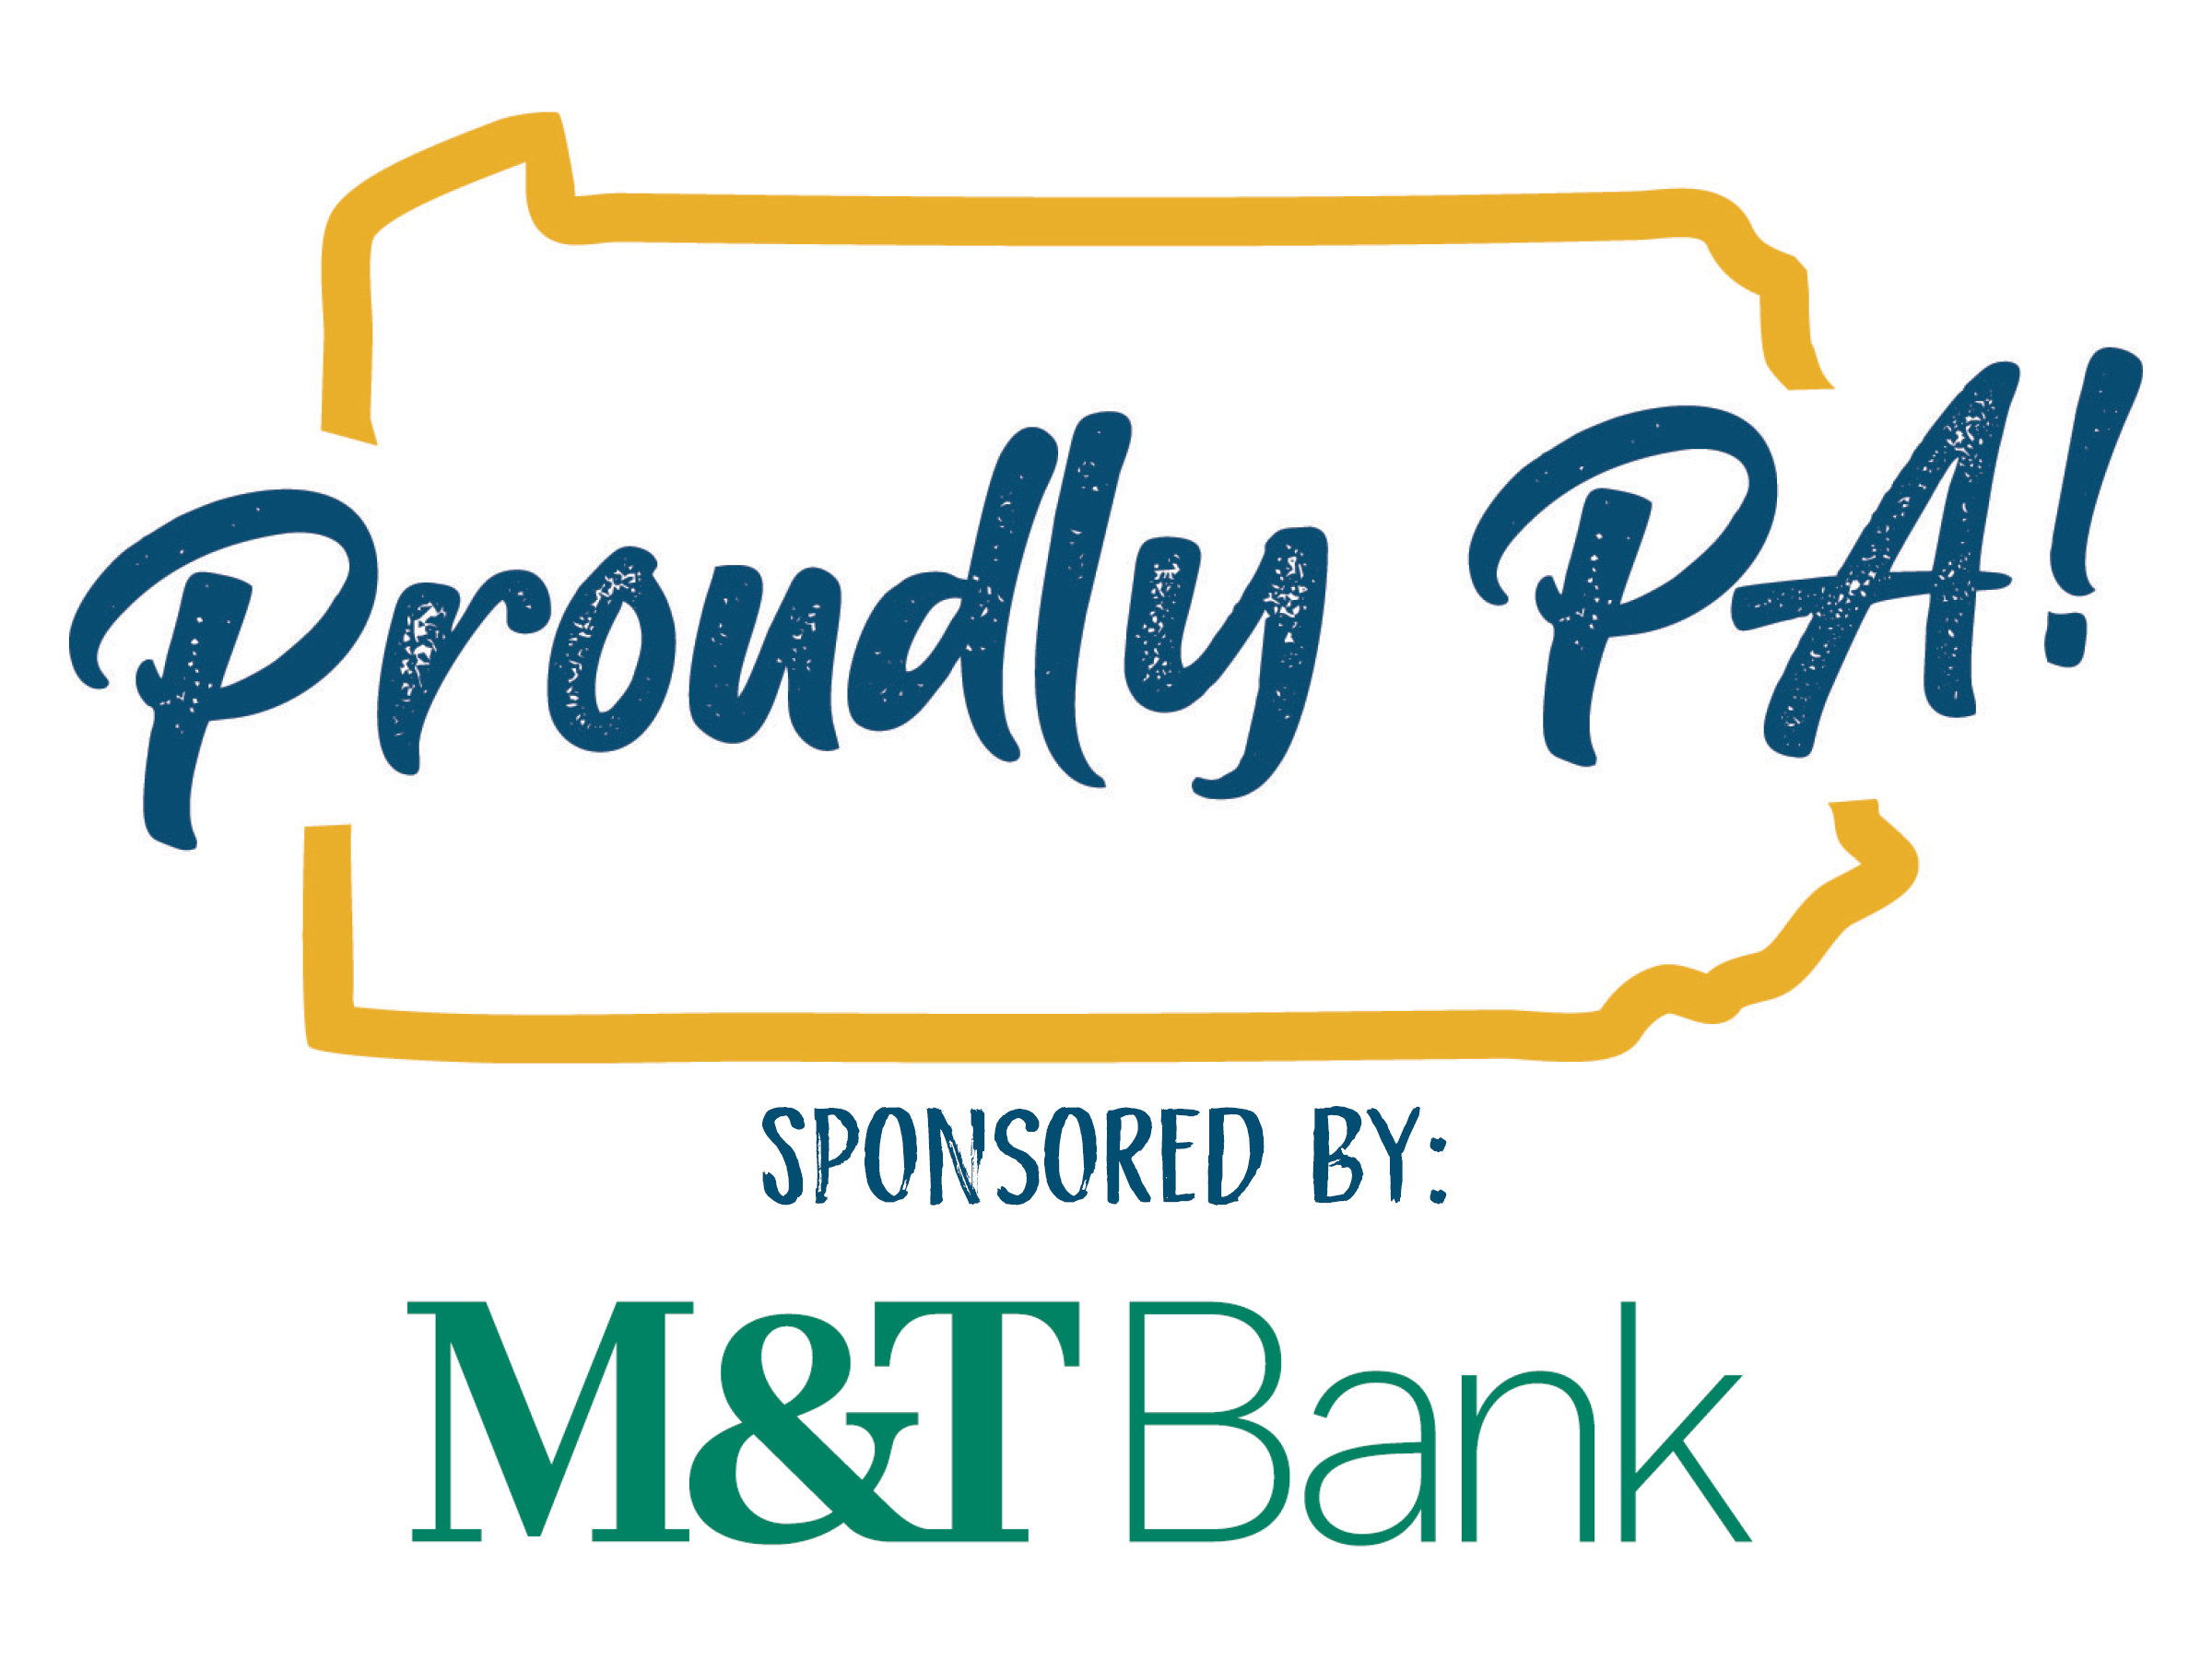 Proudly PA Logo sponsored by M&T Bank